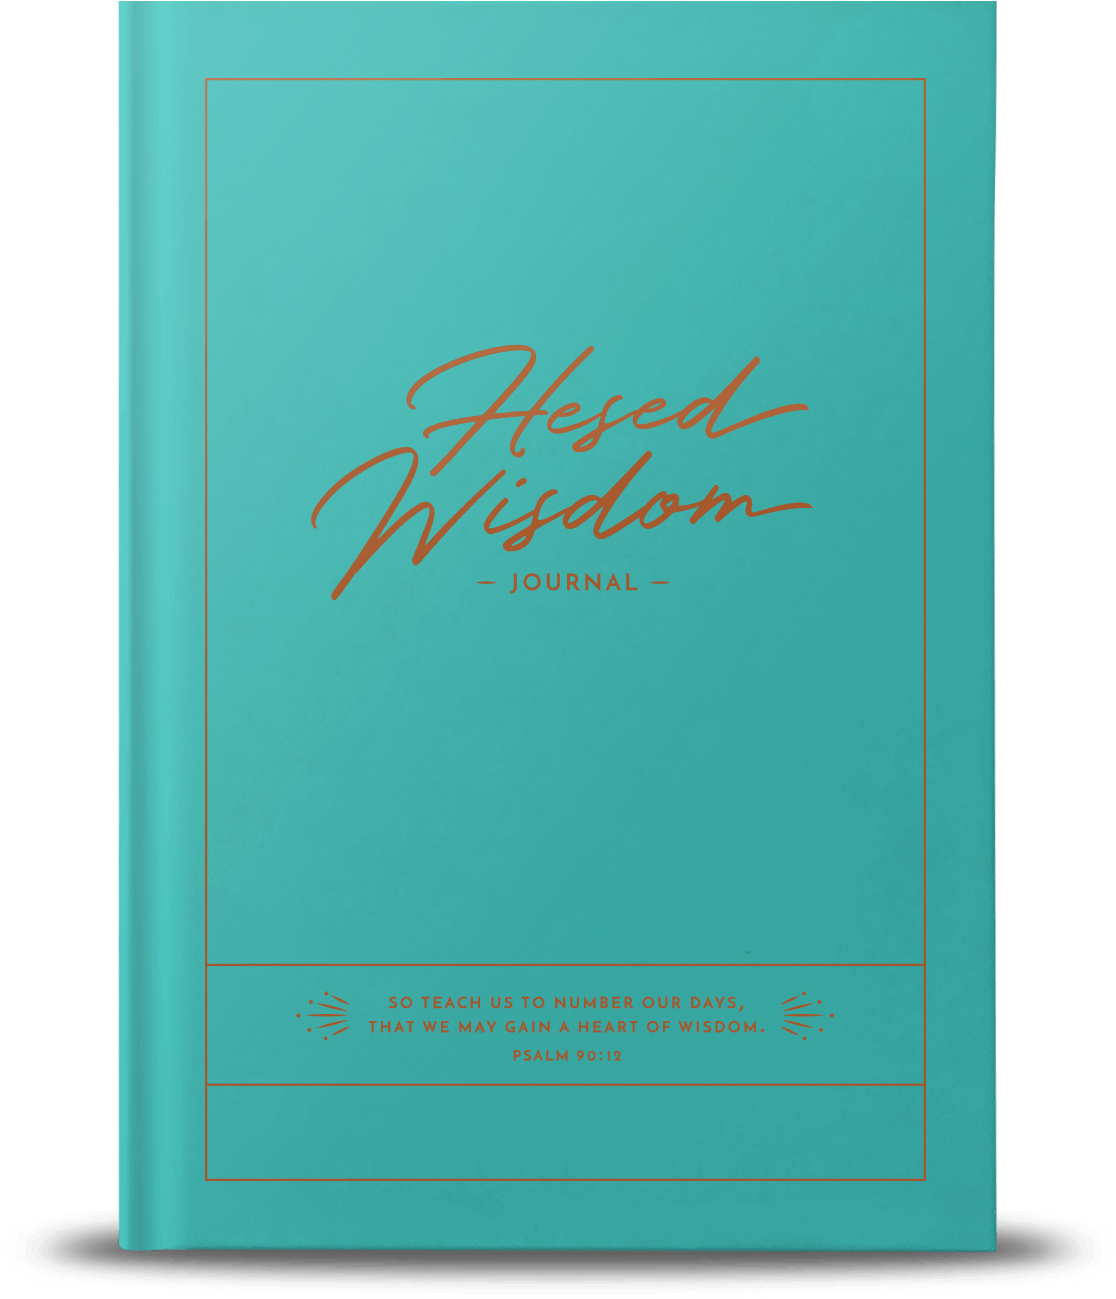 Hesed Wisdom Journal Cover